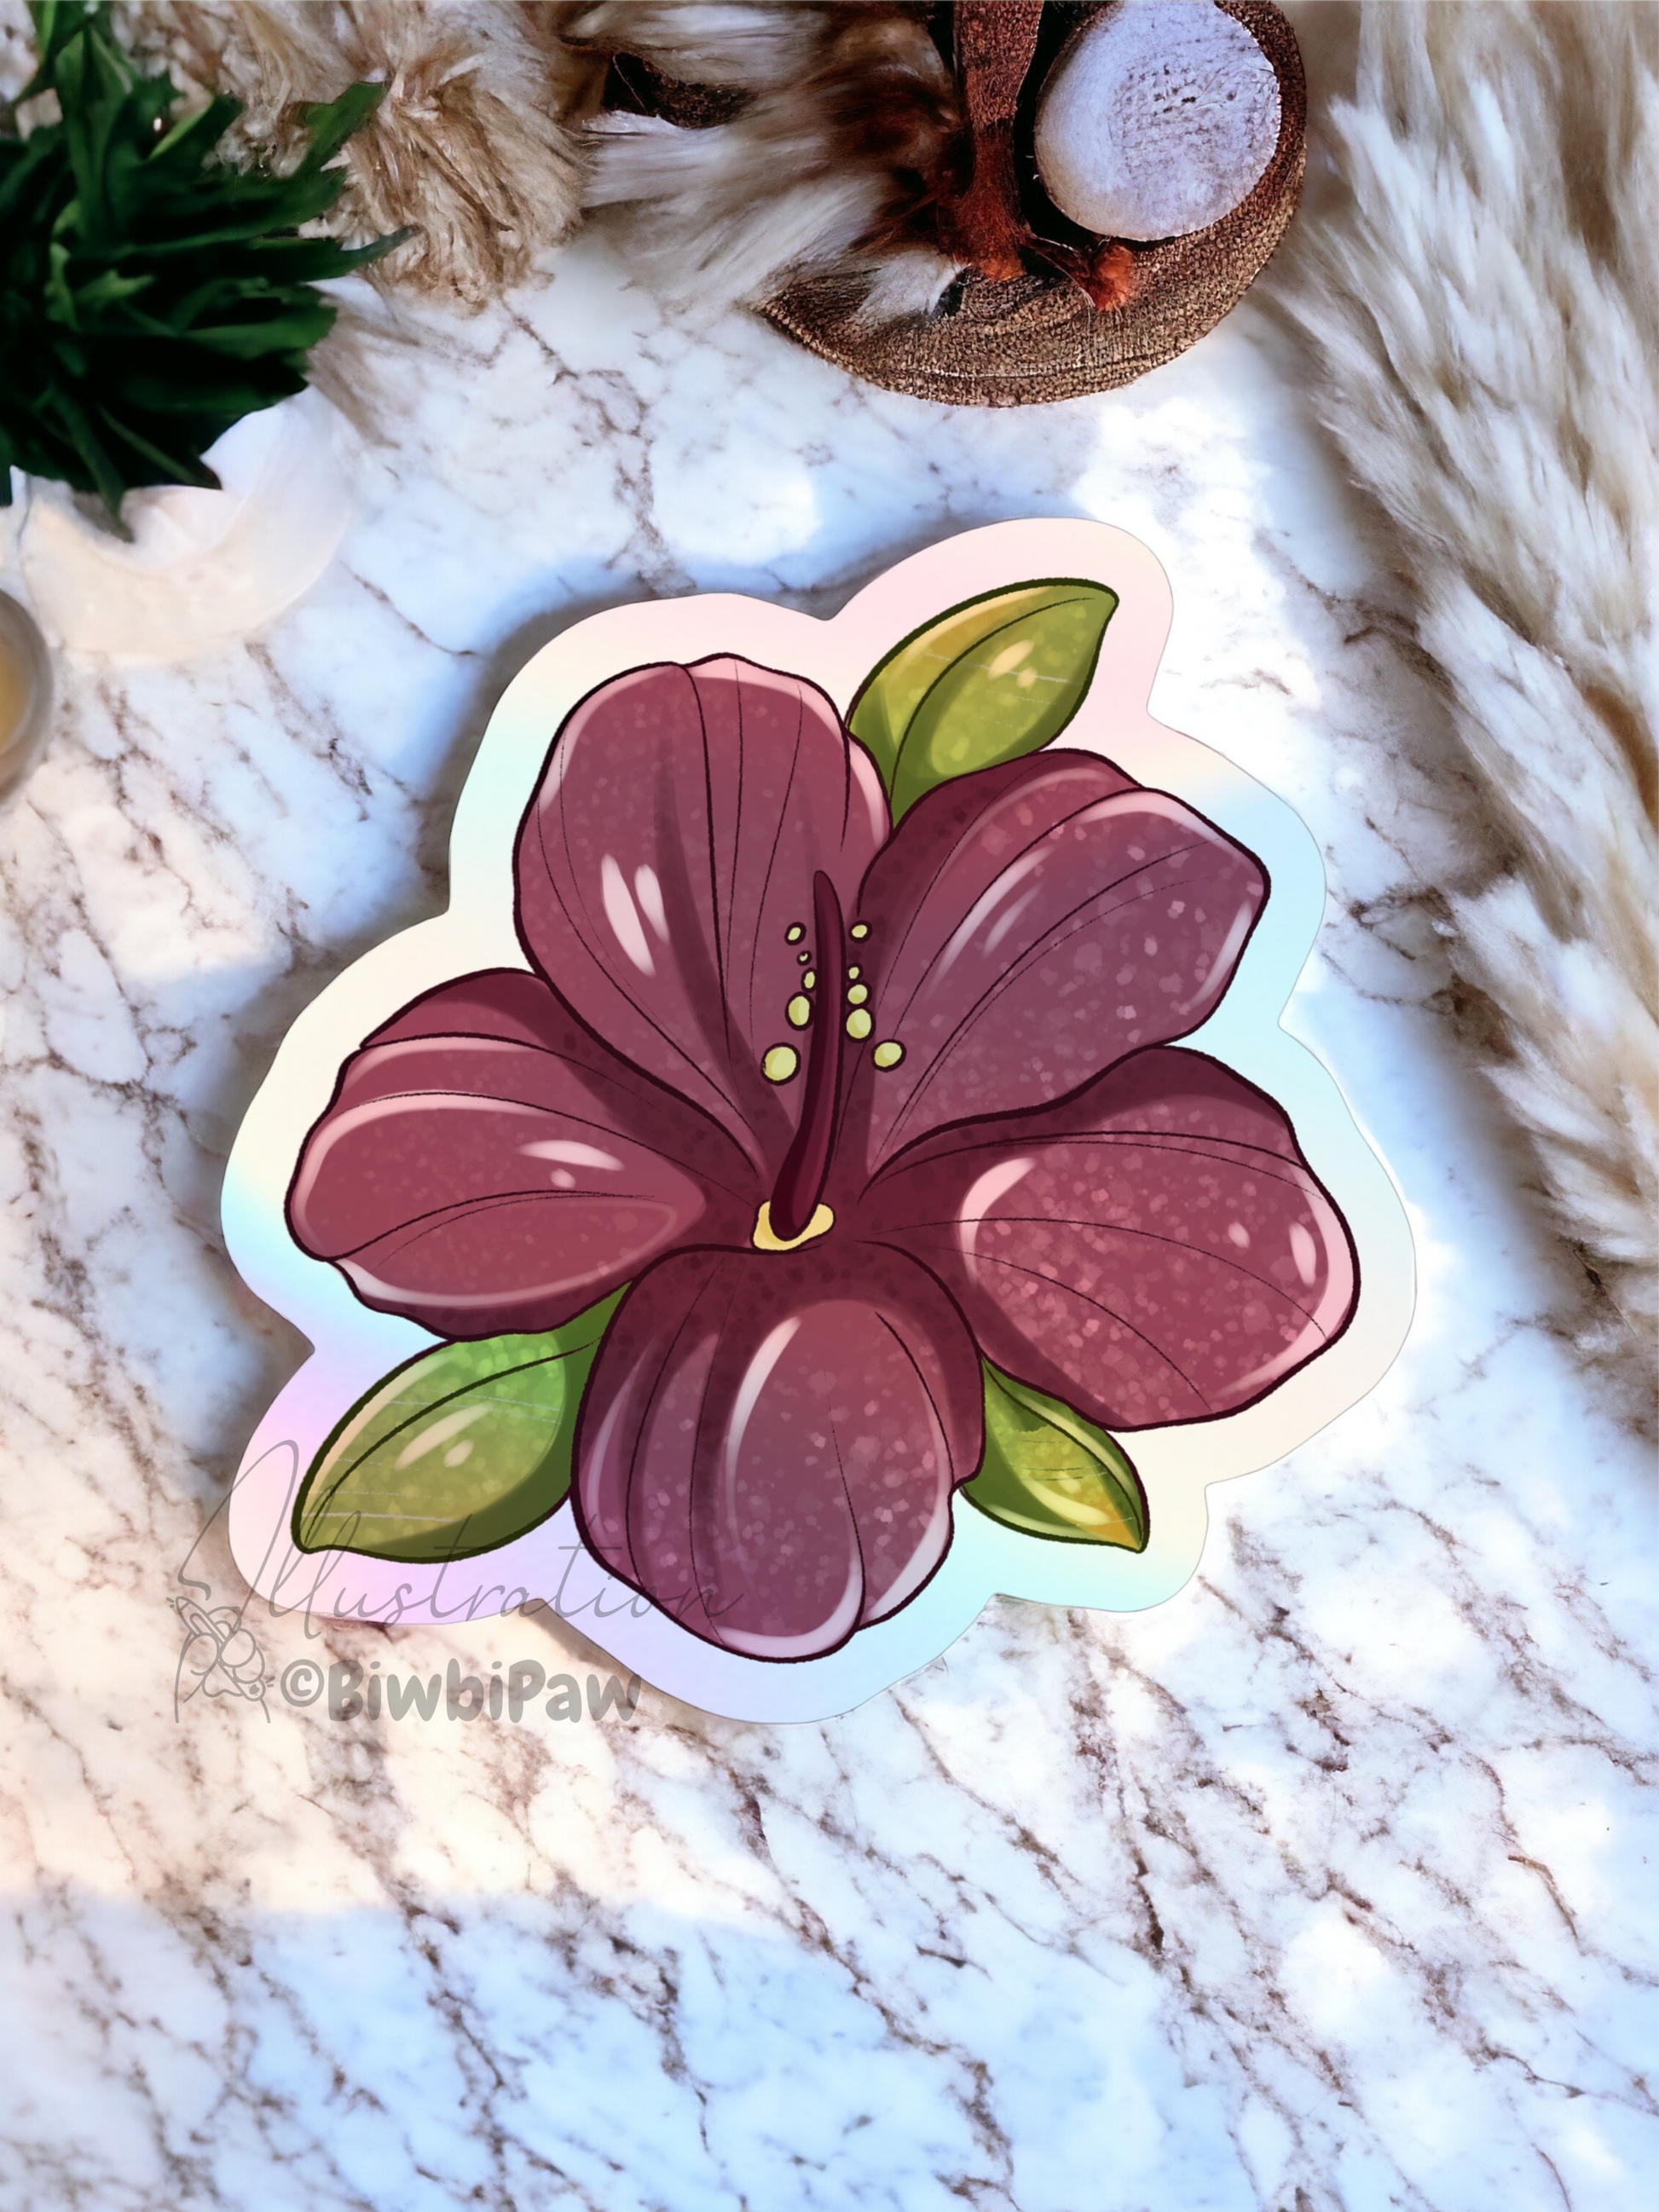 Sticker fleur holographique – Biwbi Paw